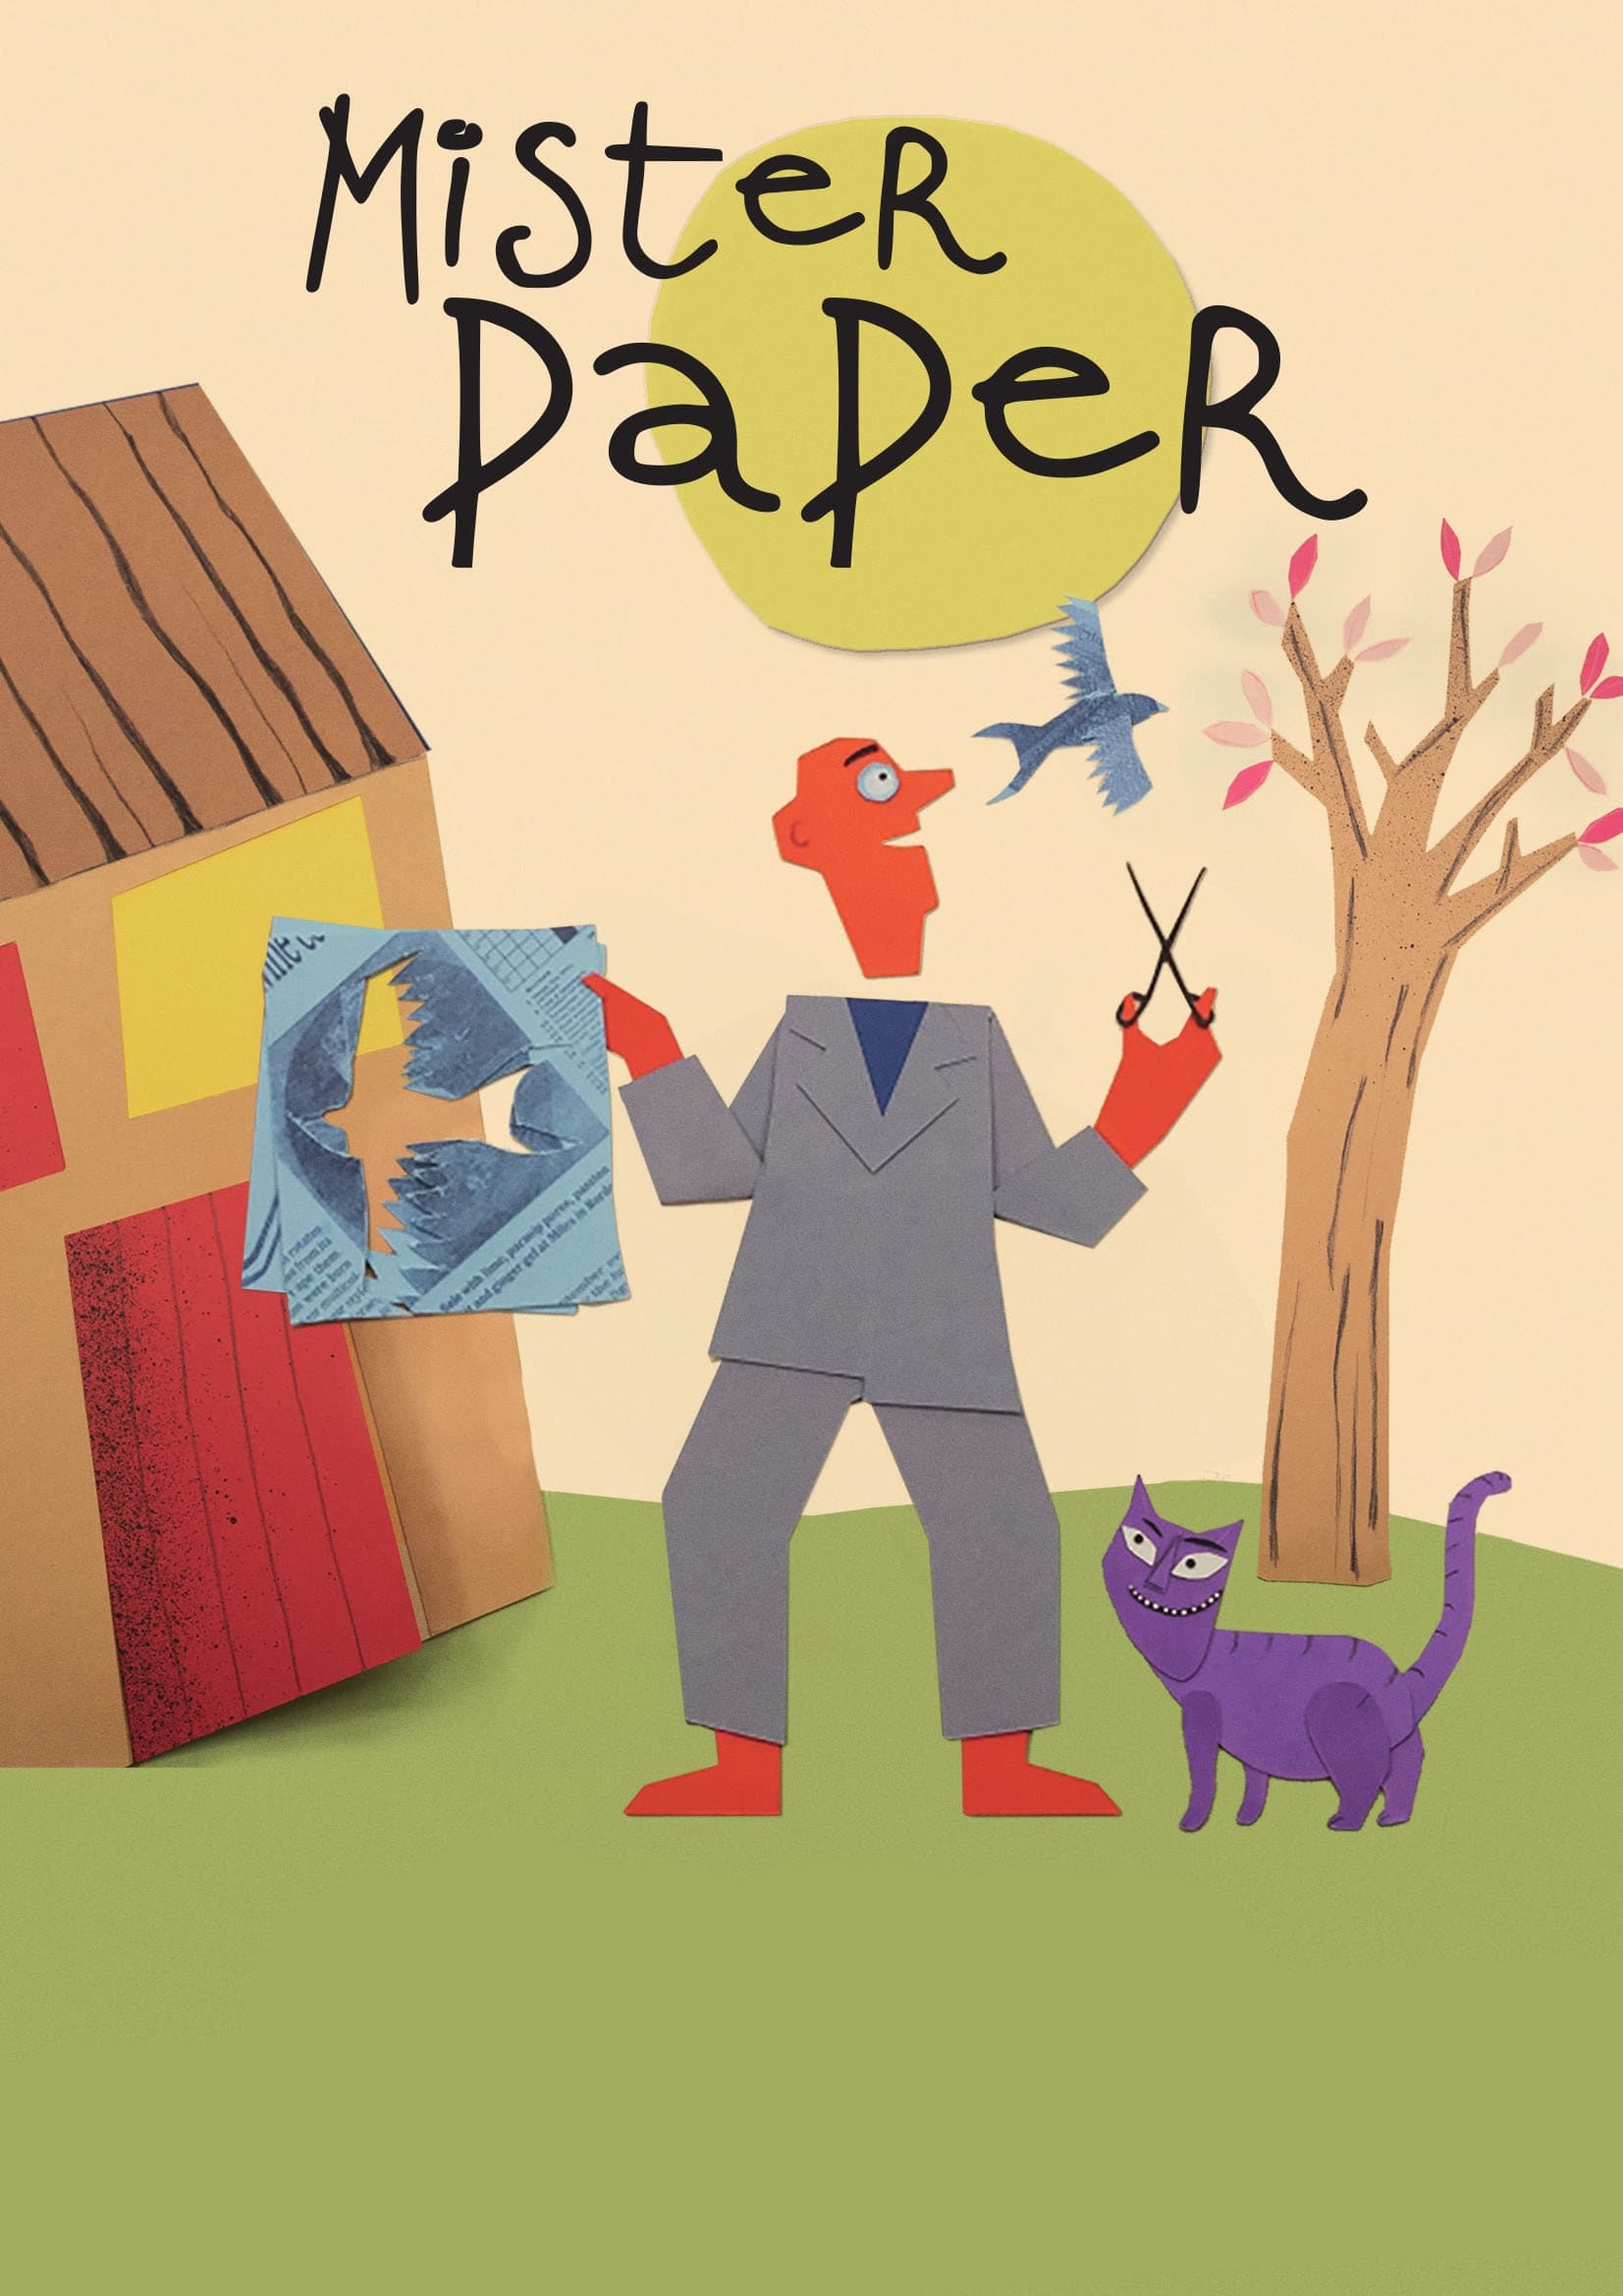 Mister Paper